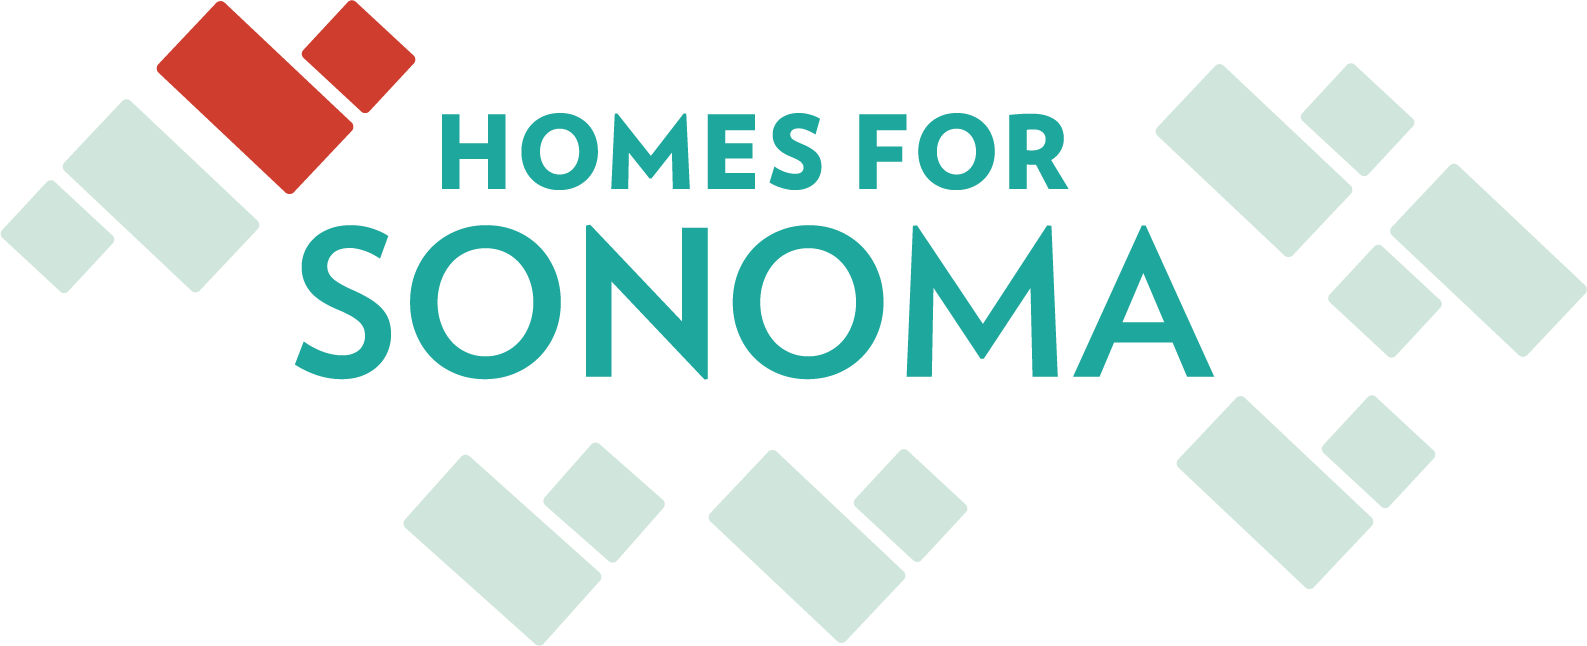 Homes for Sonoma Logo.png